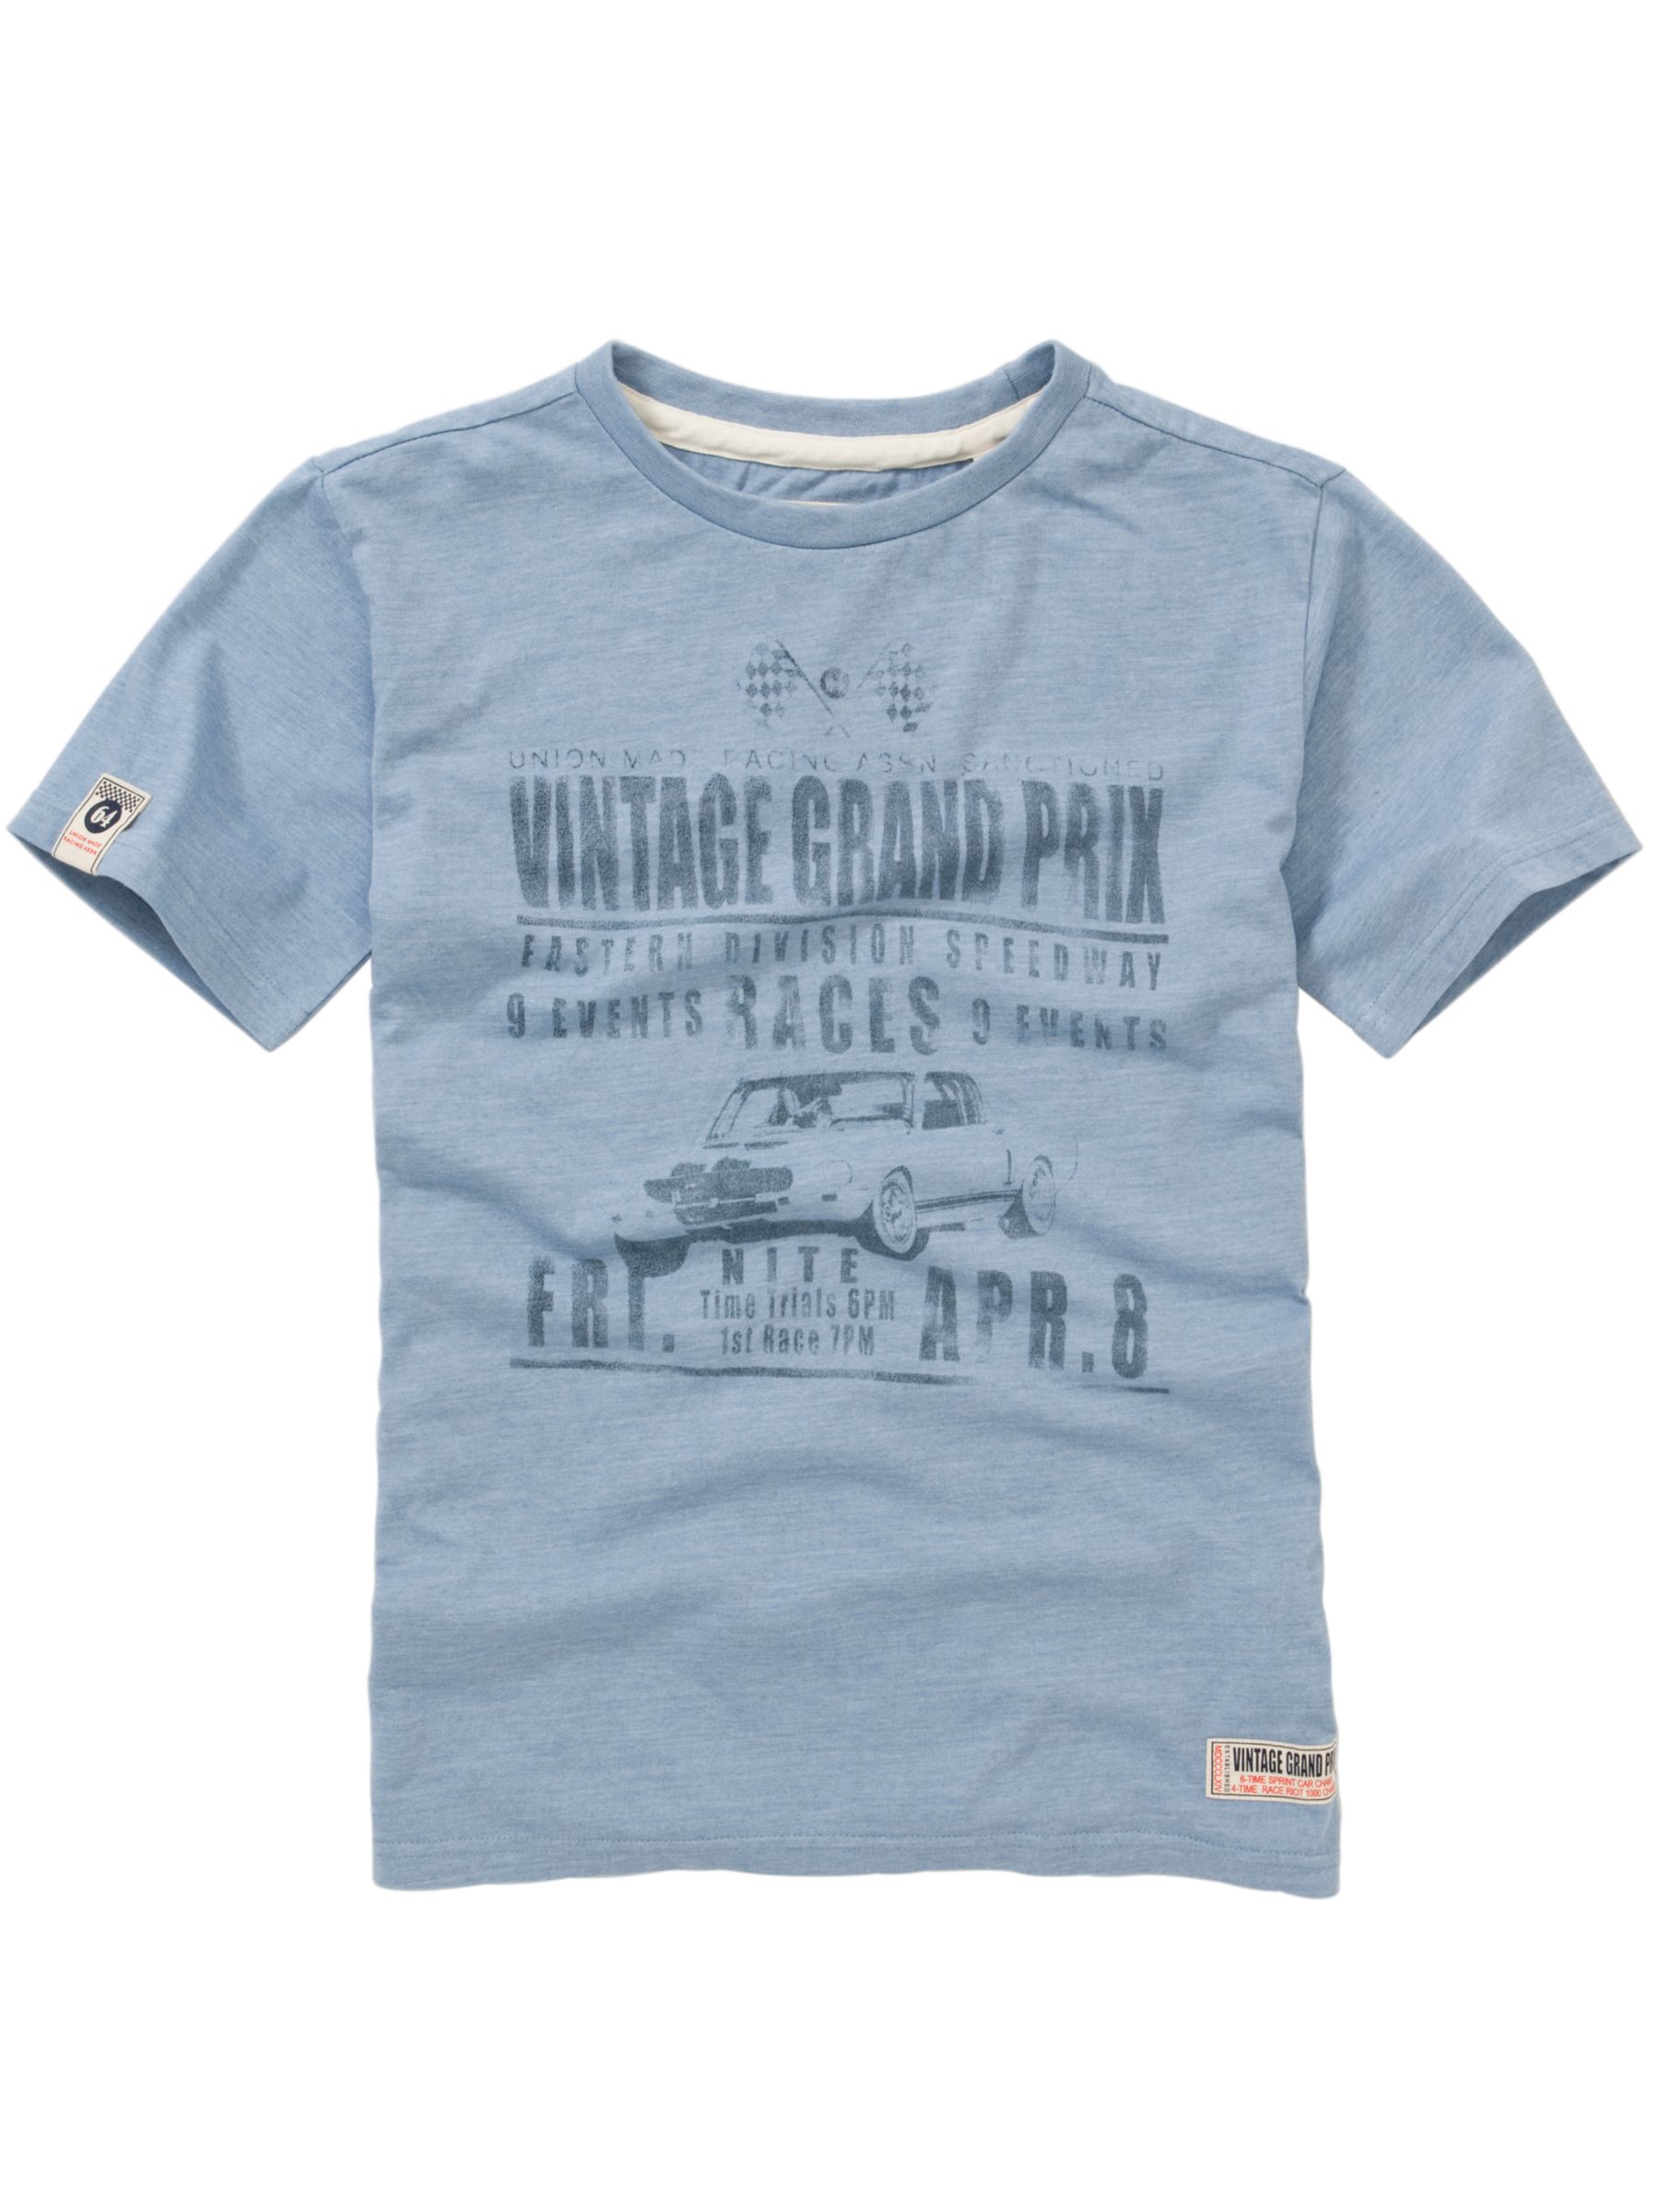 Vintage Grand Prix T-Shirt, Grey